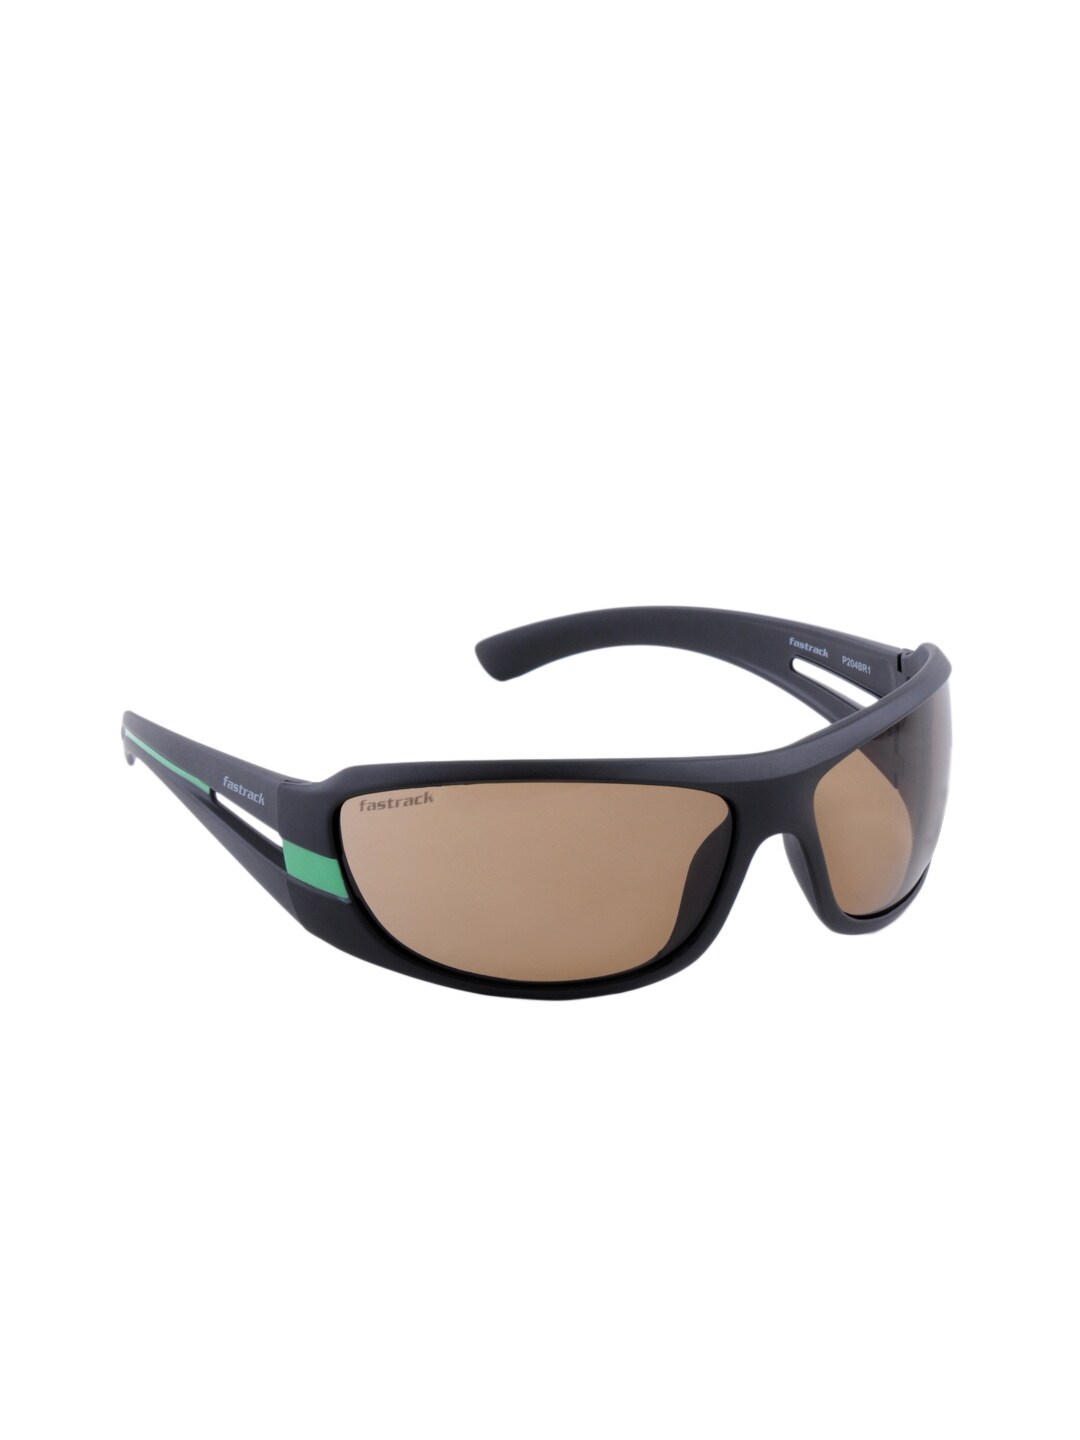 Fastrack Men UV Protected Sporty Sunglasses